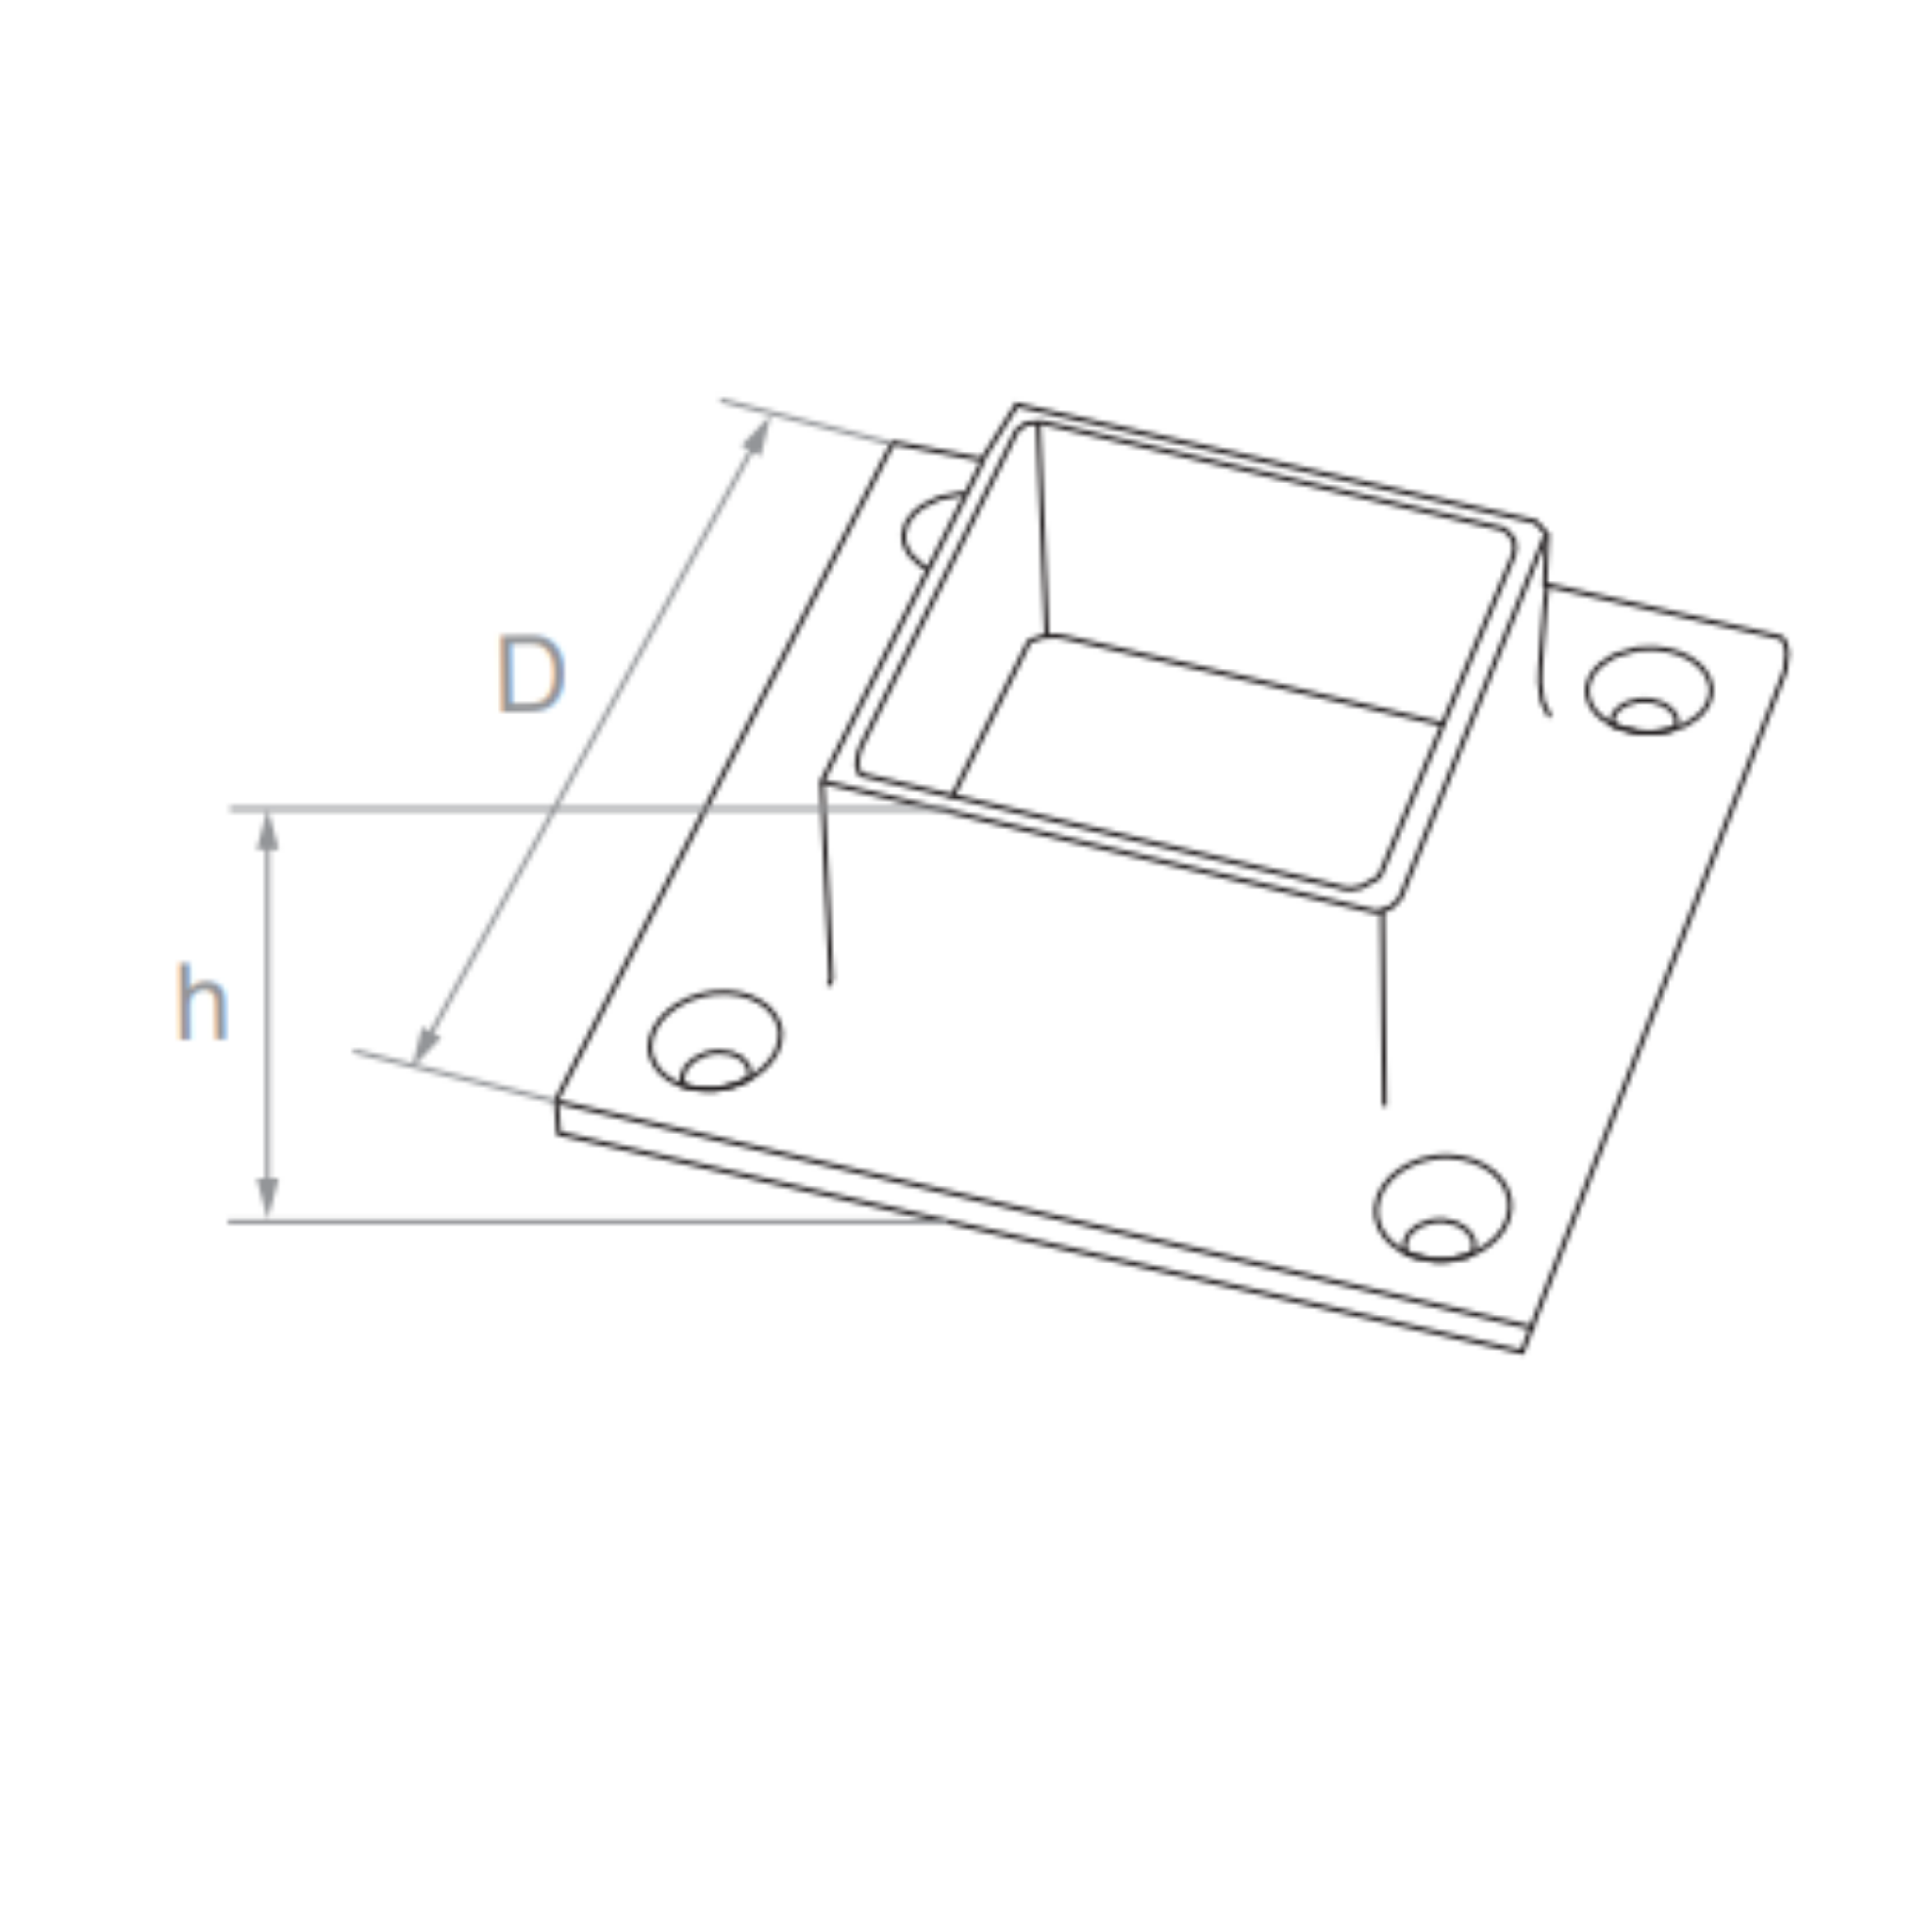 Axial handrail fastening - StroFIX